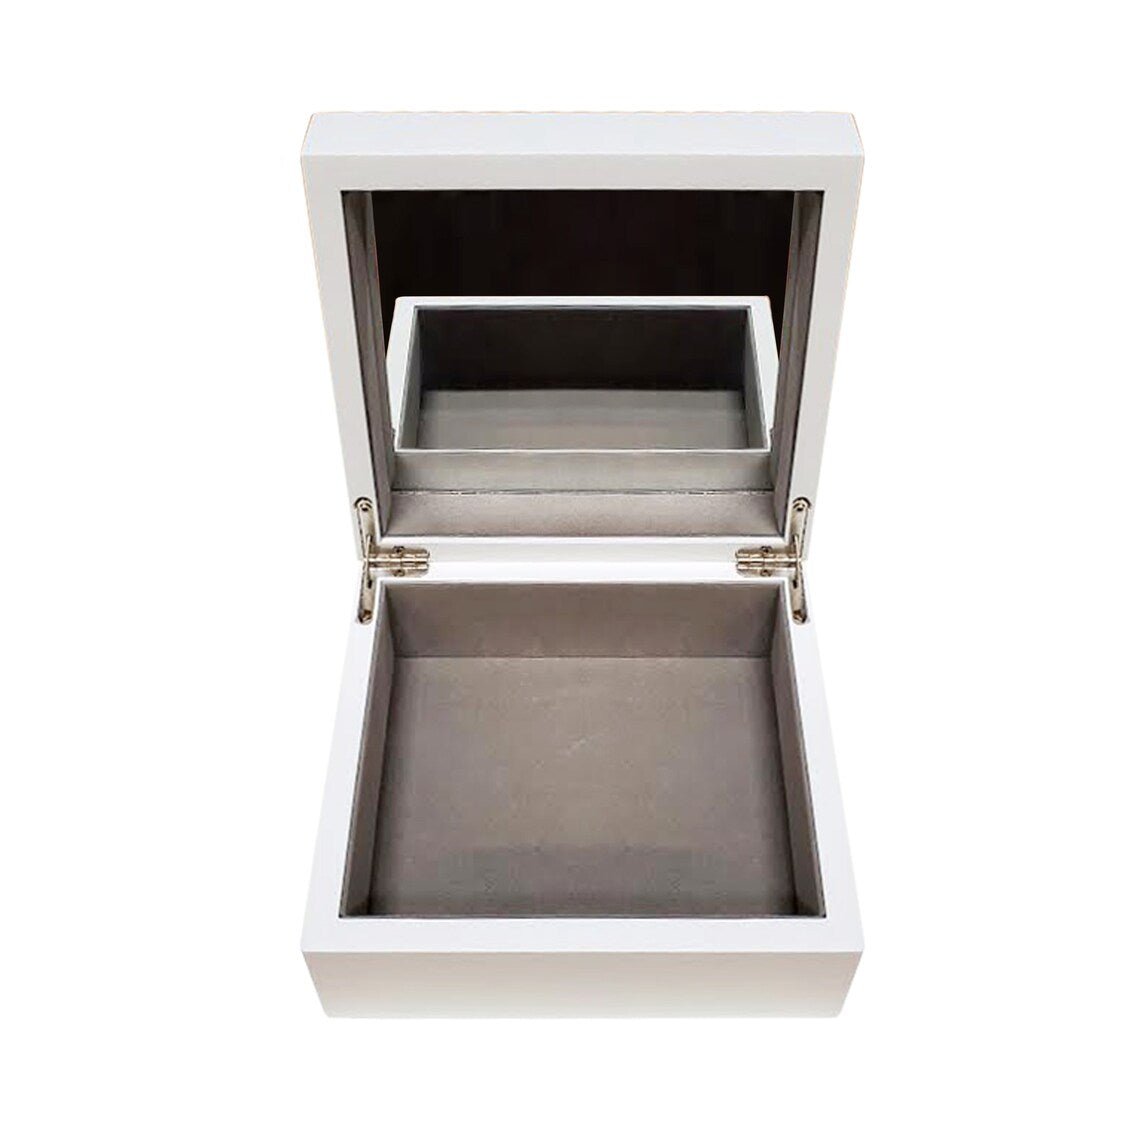 Modern Inspirational White Jewelry Keepsake Box for Children 6x5.5 - Give You Hope - LifeSong Milestones